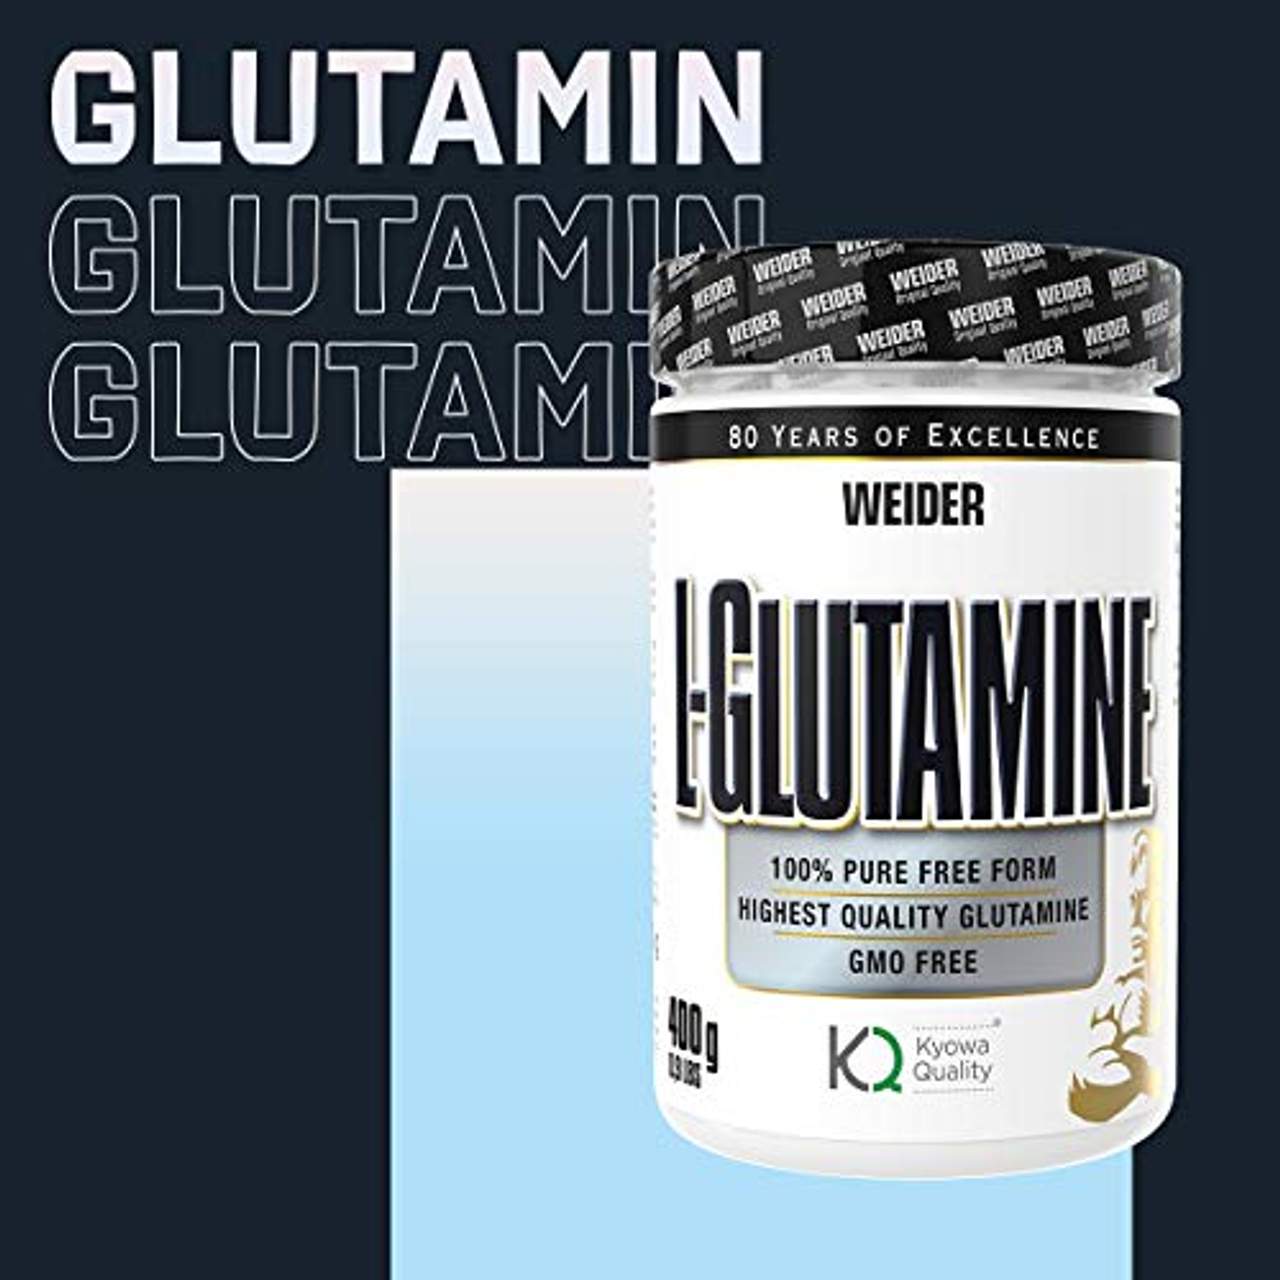 Weider L-Glutamin 100% Aminosäure Pulver